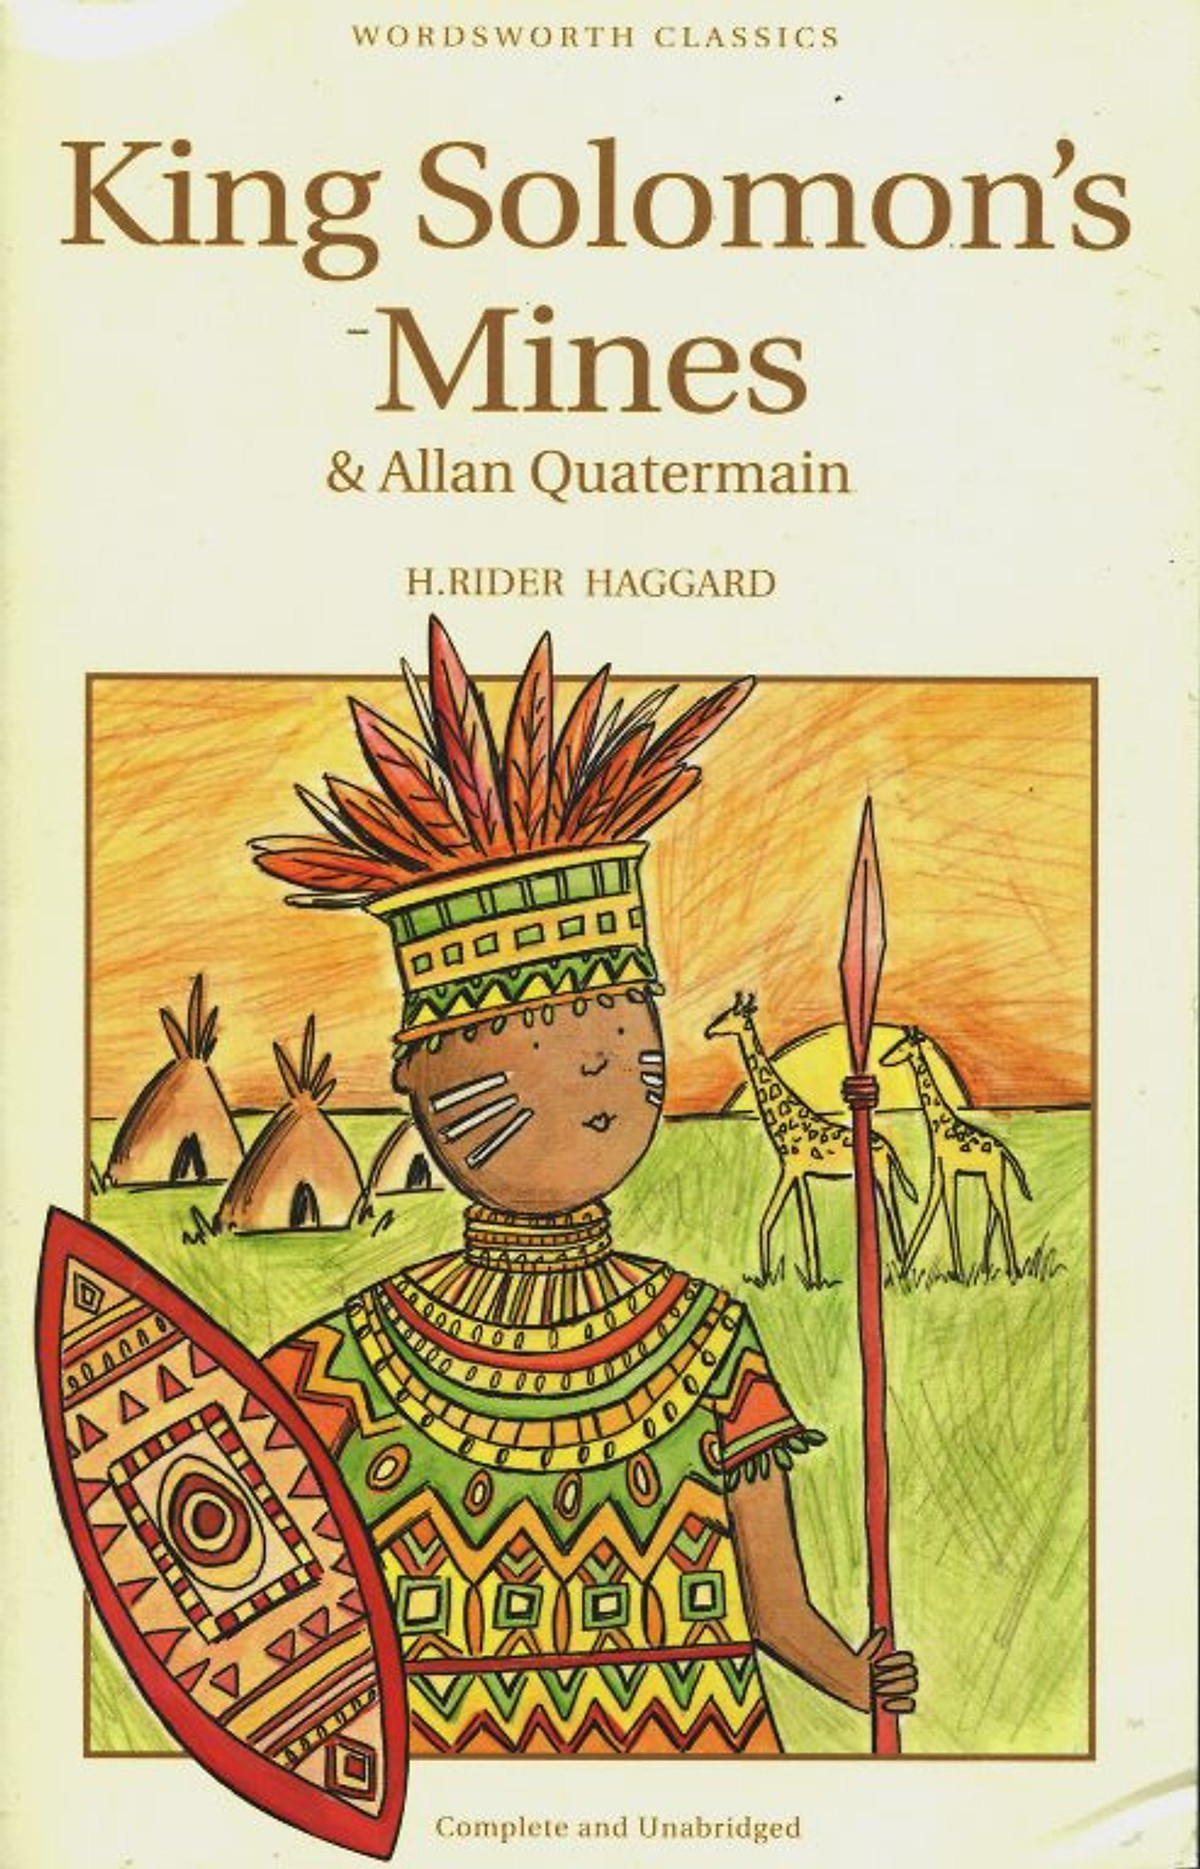 Wordsworth Classics : King Solomon Mines and Allan Quatermain